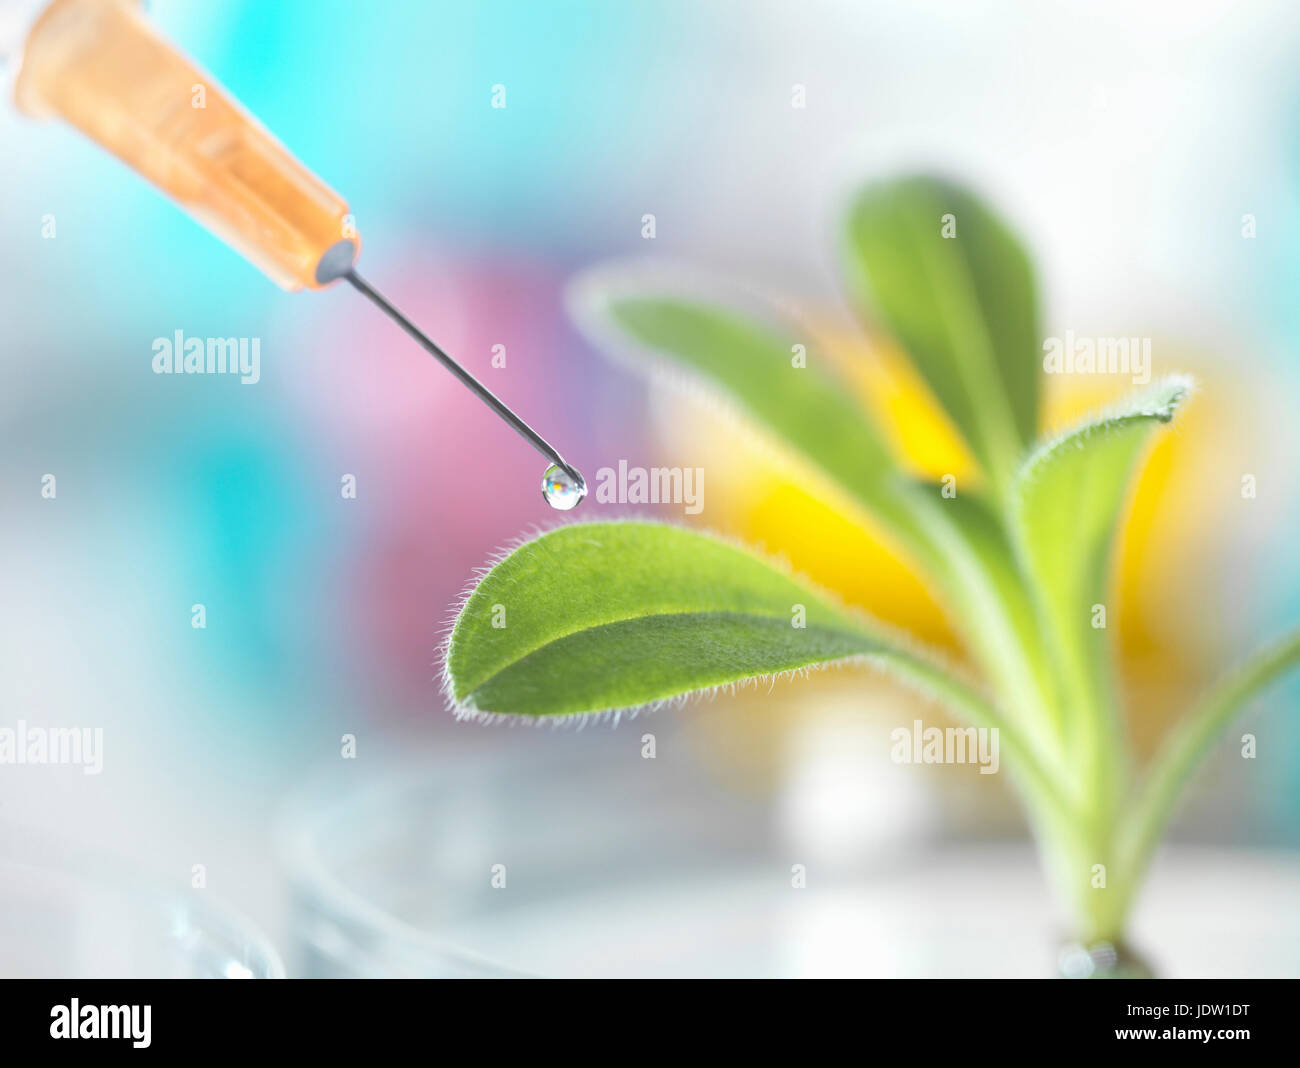 Needle dropping liquid onto plant Stock Photo